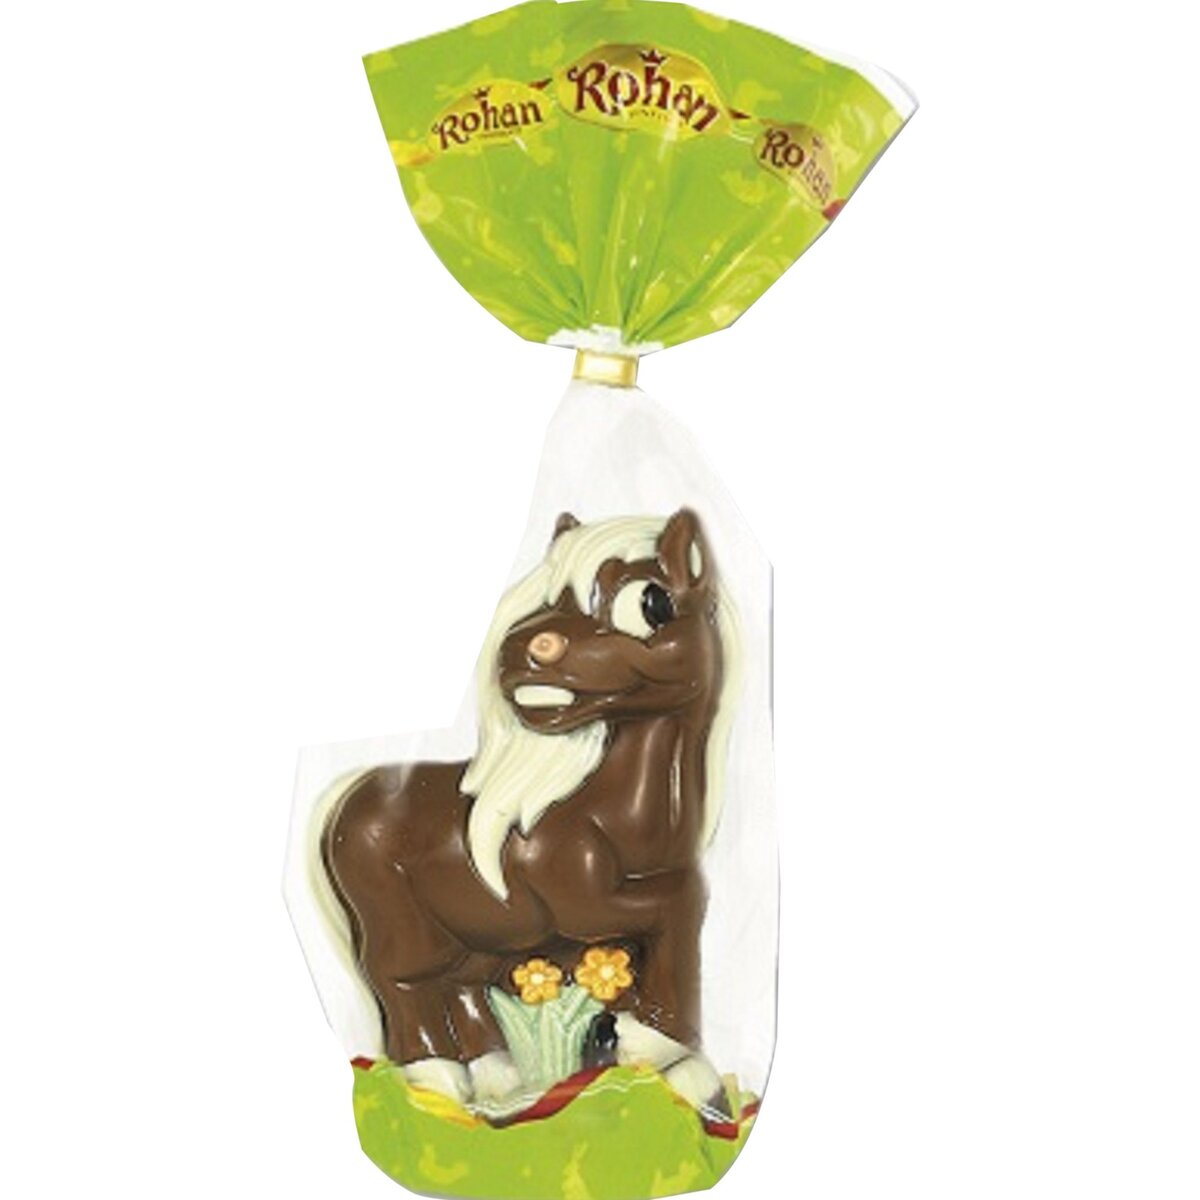 ROHAN Rohan poney chocolat au lait 220g